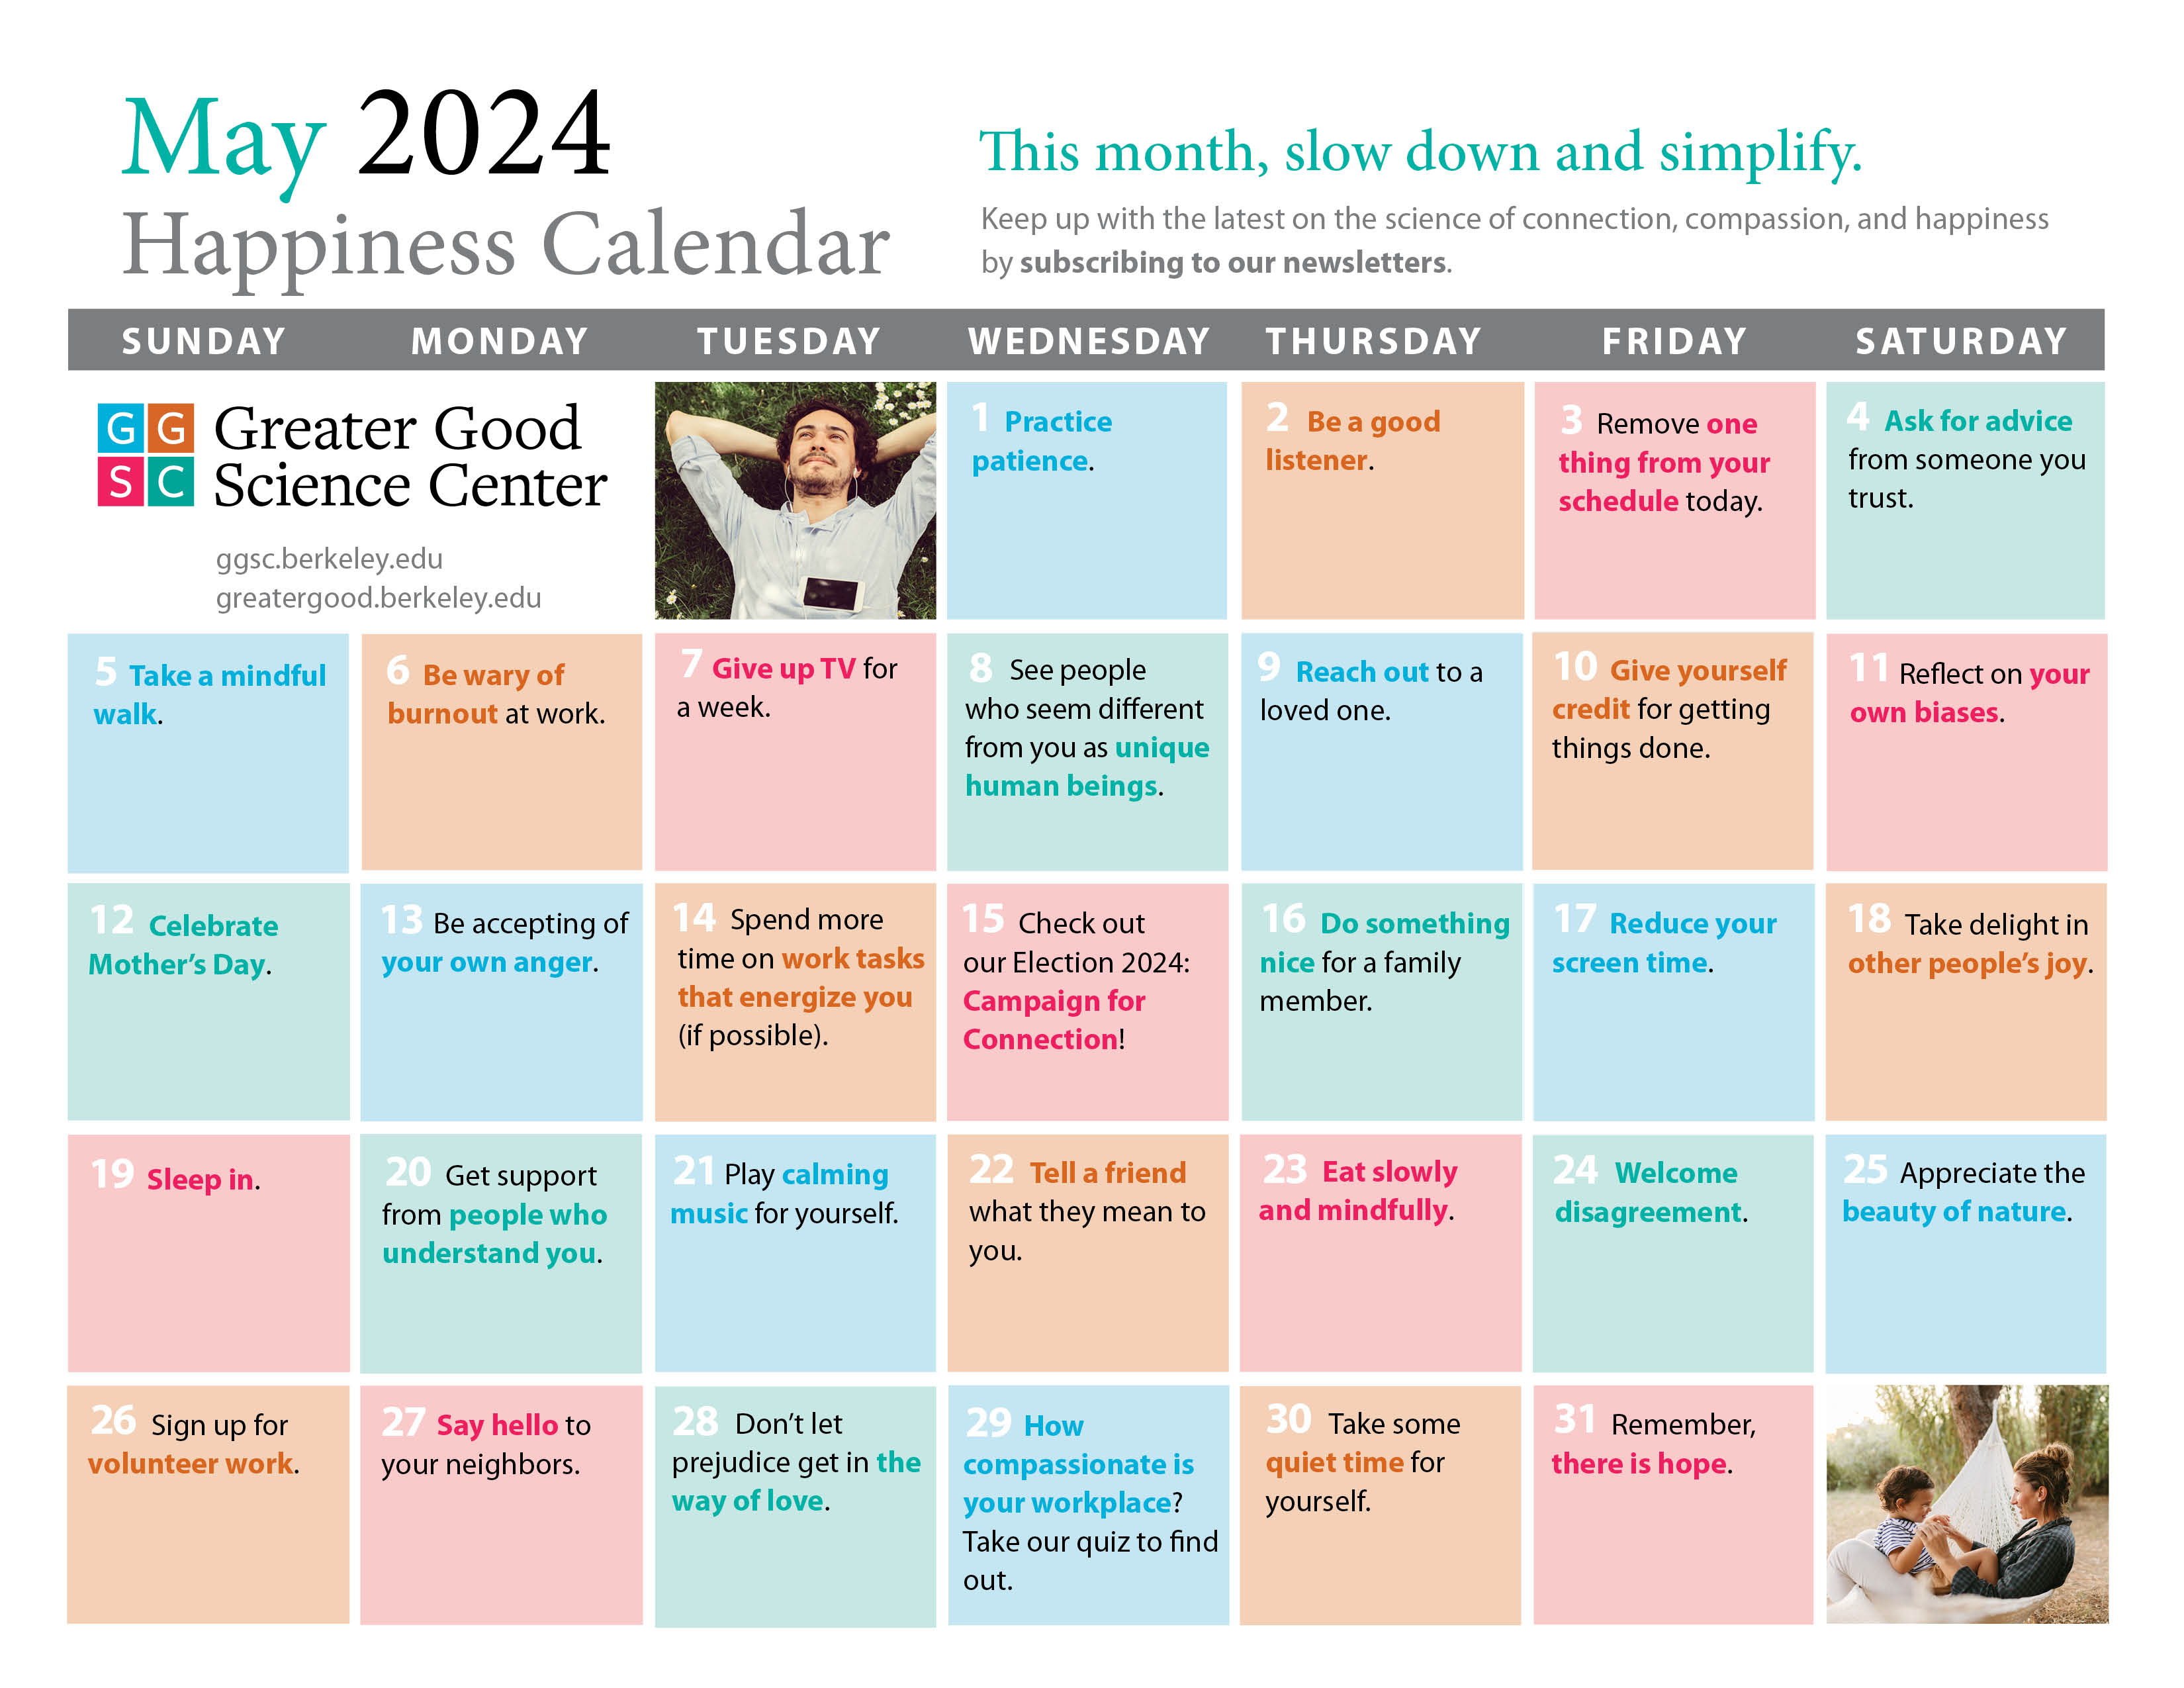 May 2024 happiness calendar